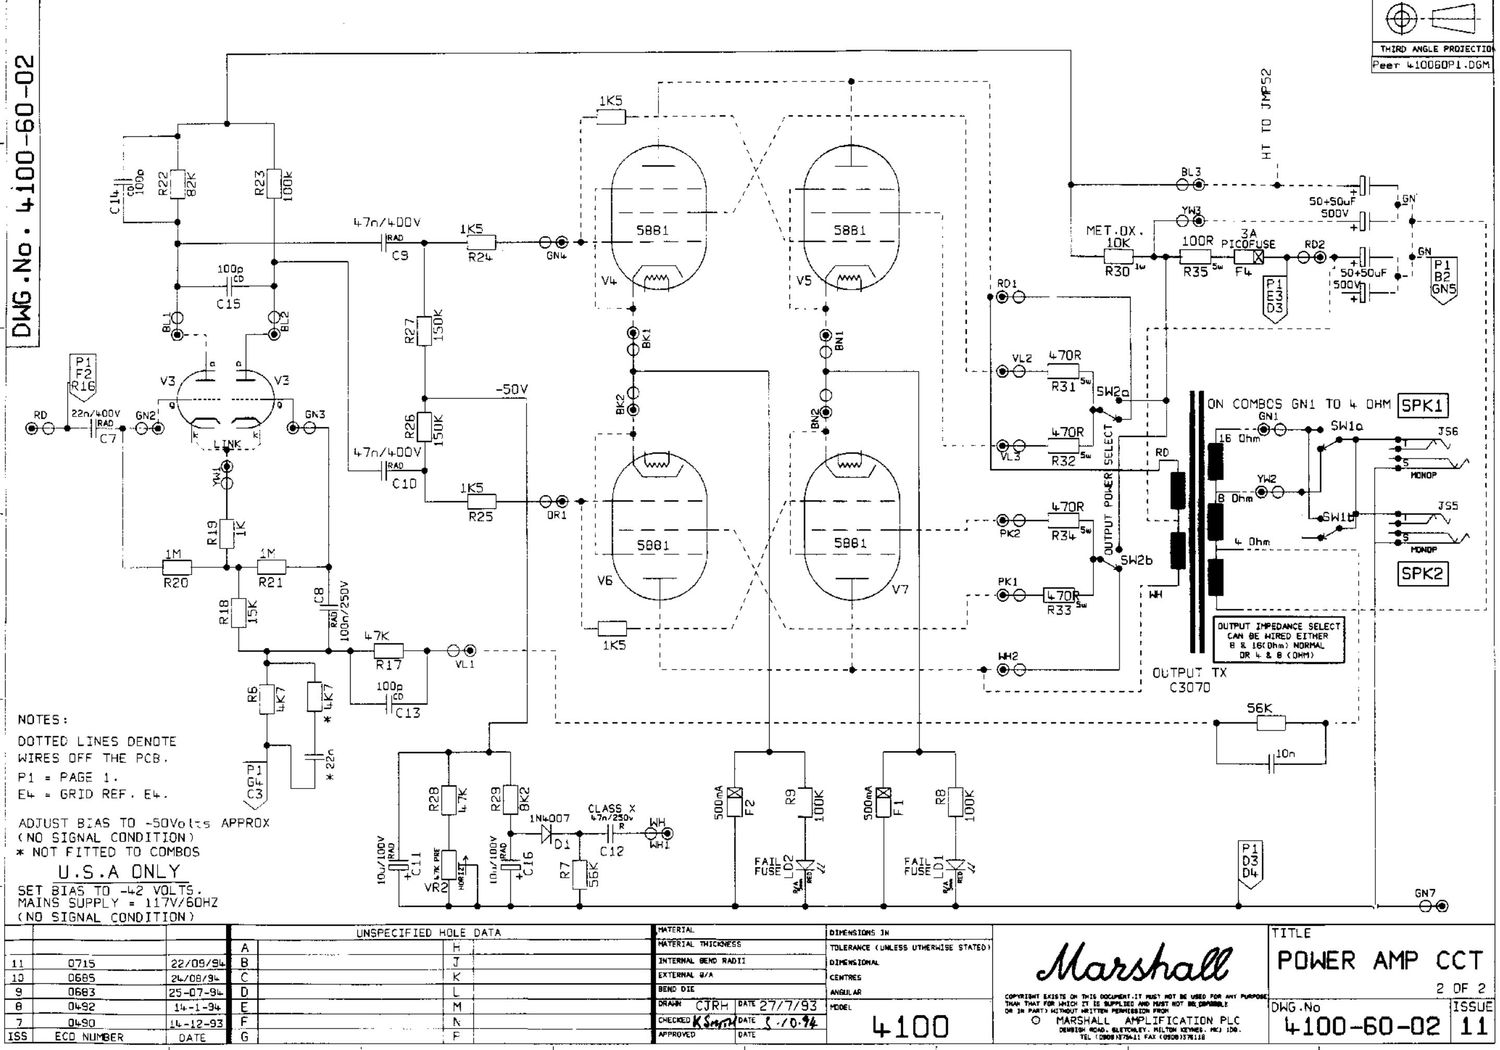 Marshall 4100 Power Amp 4100 60 02 Issue 11 2 Schematic